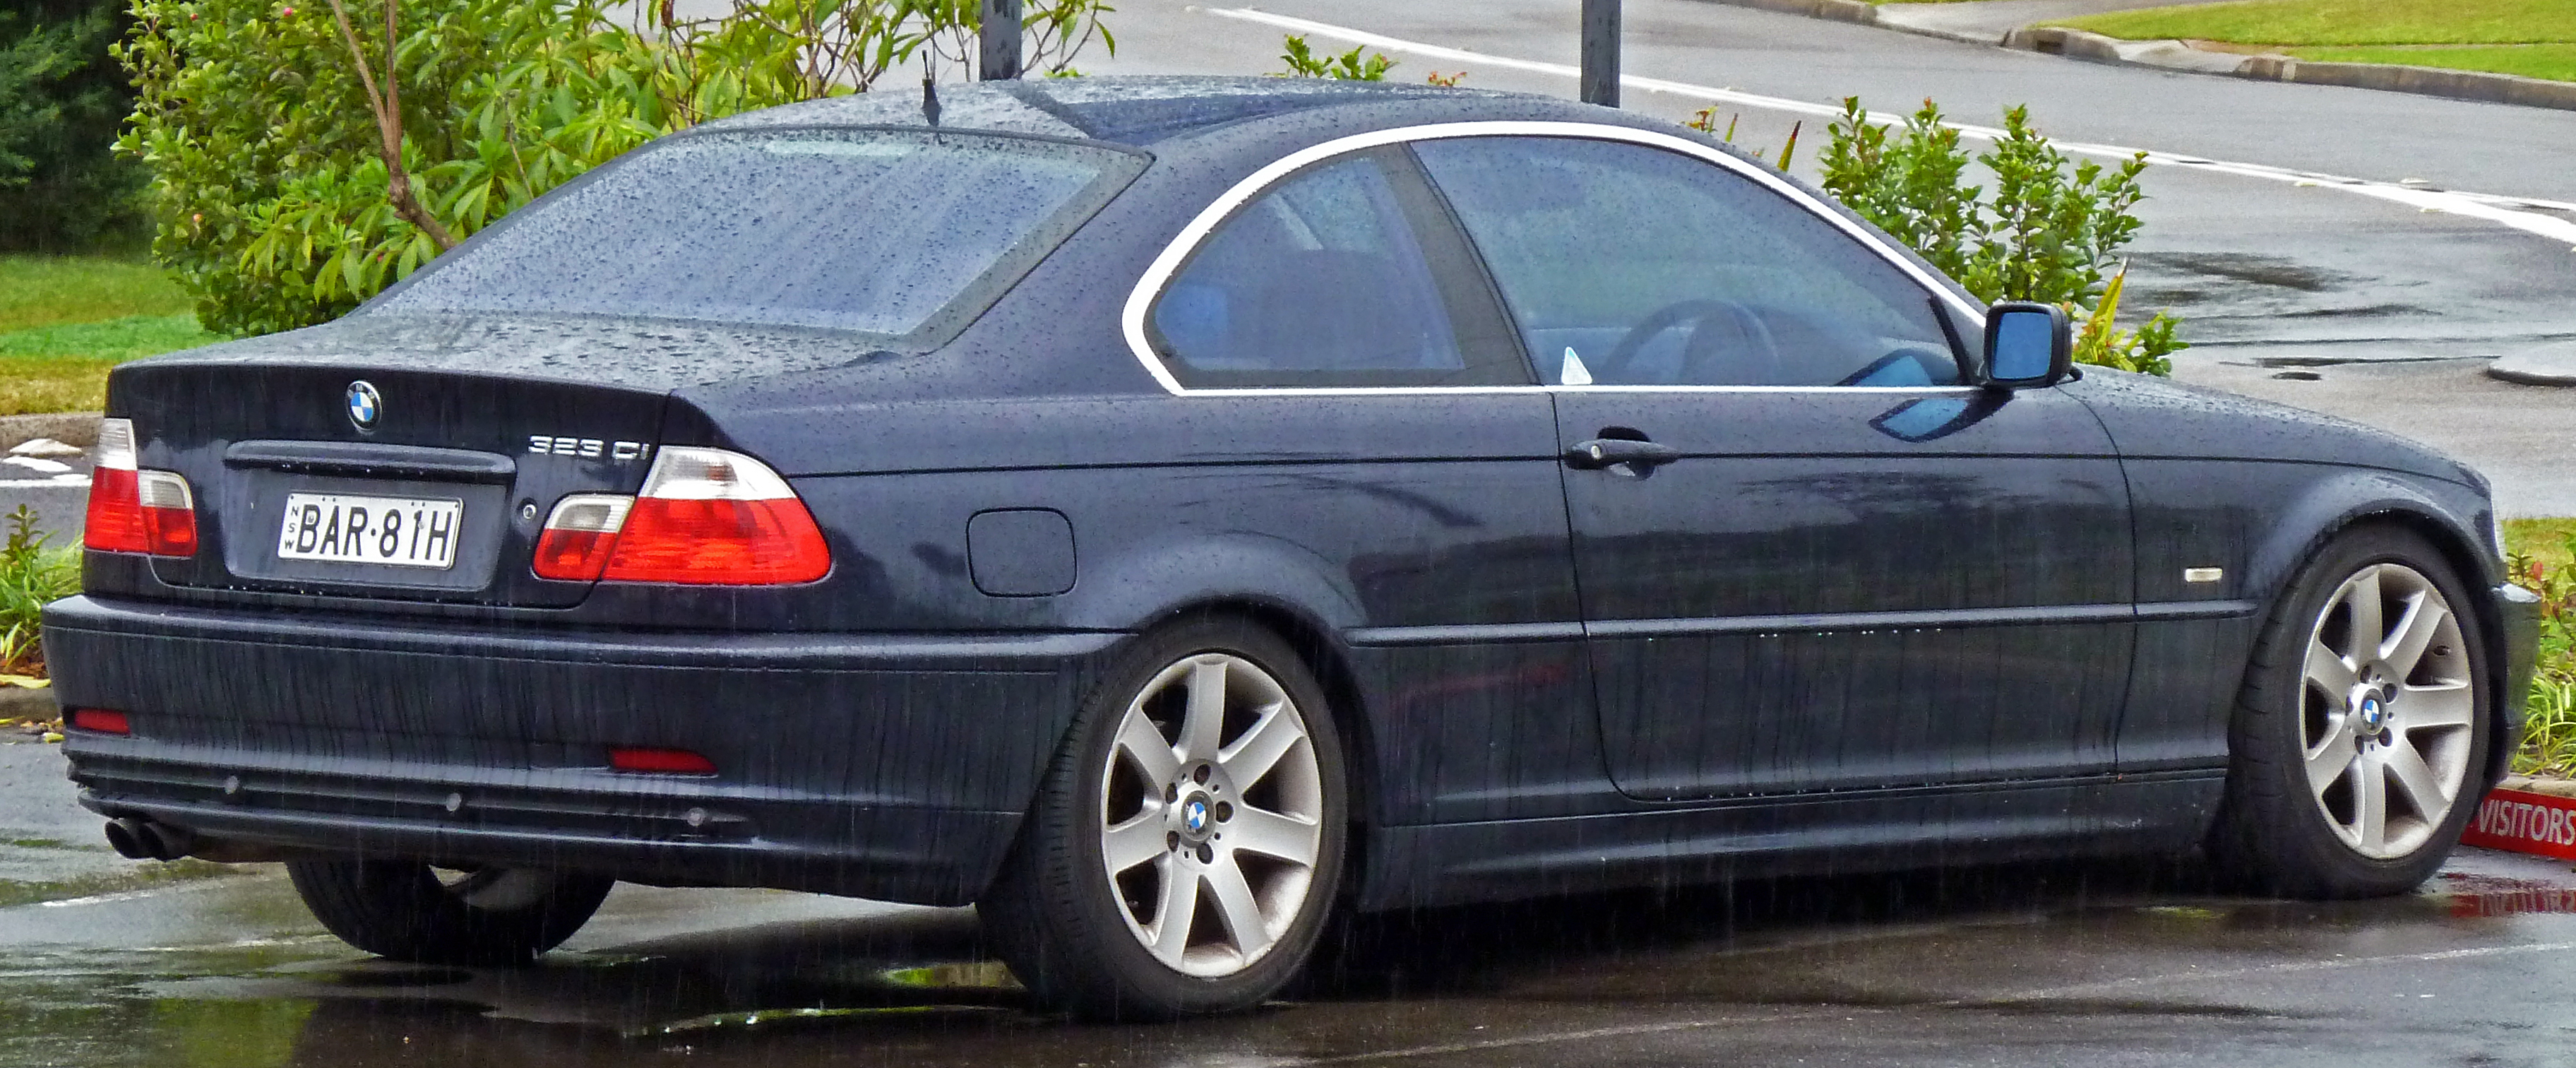 File:1999-2000 BMW 323Ci (E46) coupe 01.jpg - Wikimedia Commons